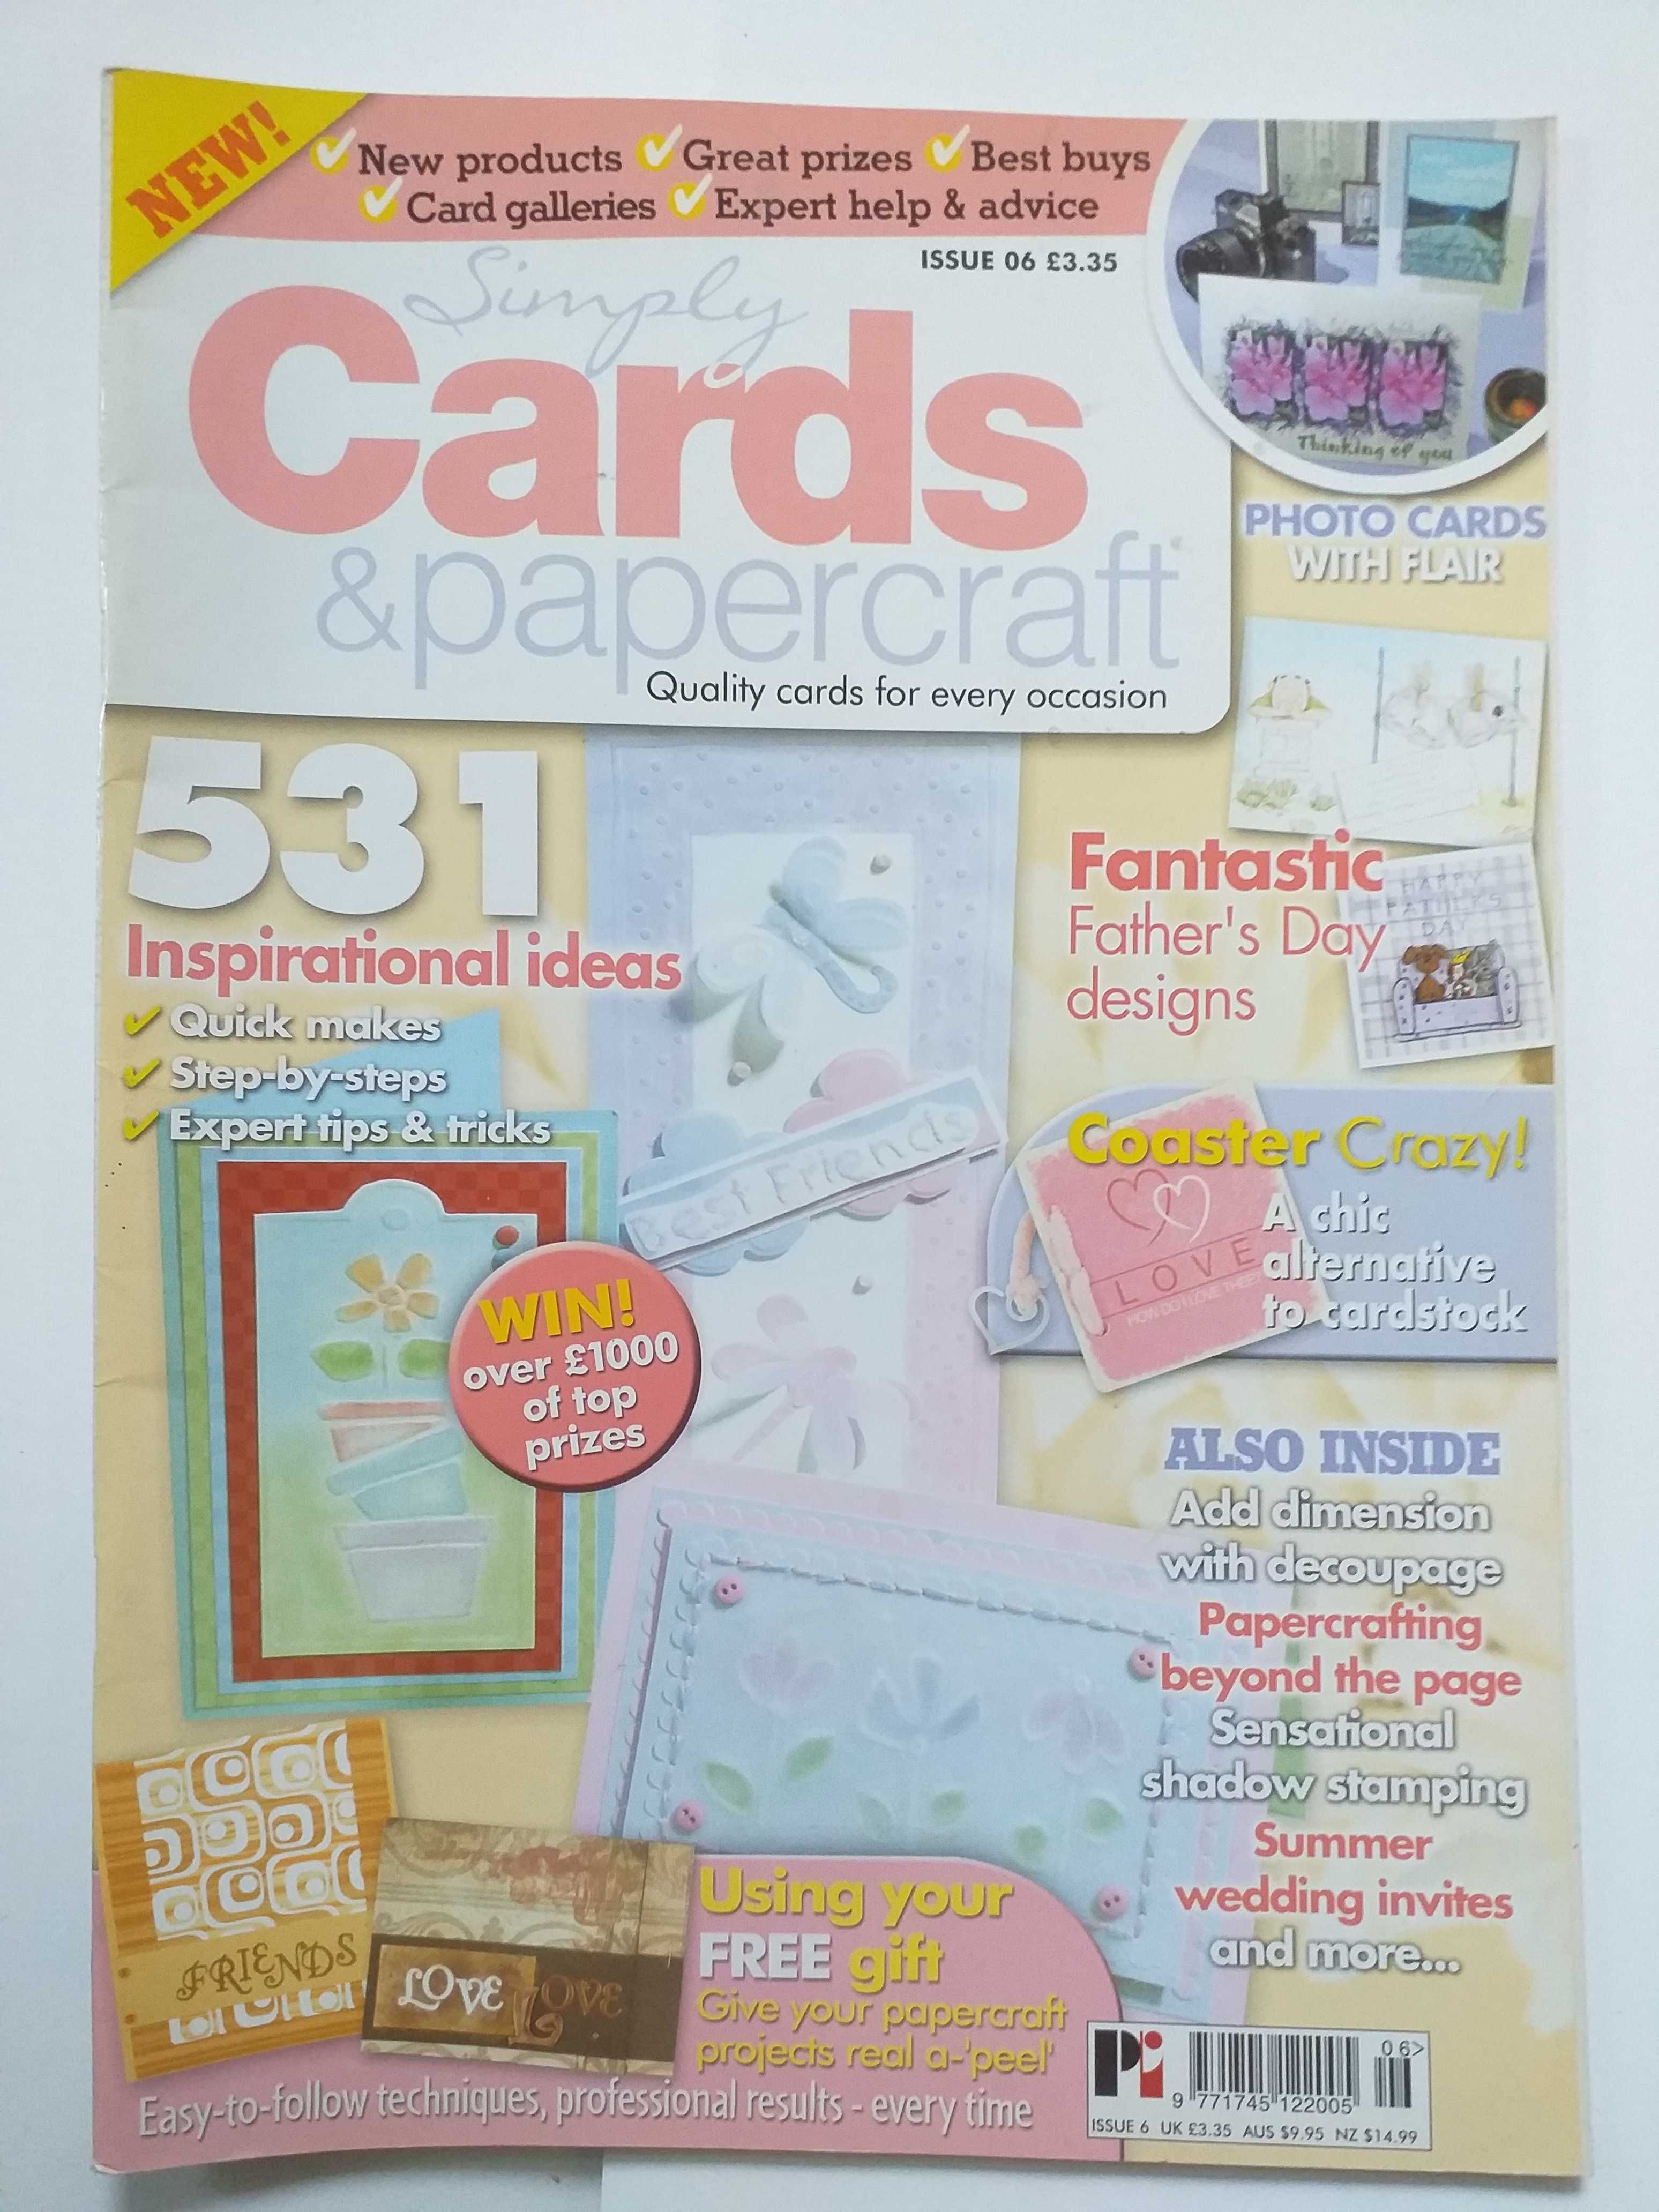 Simply Cards & papercraft - wzory kartek, czasopismo